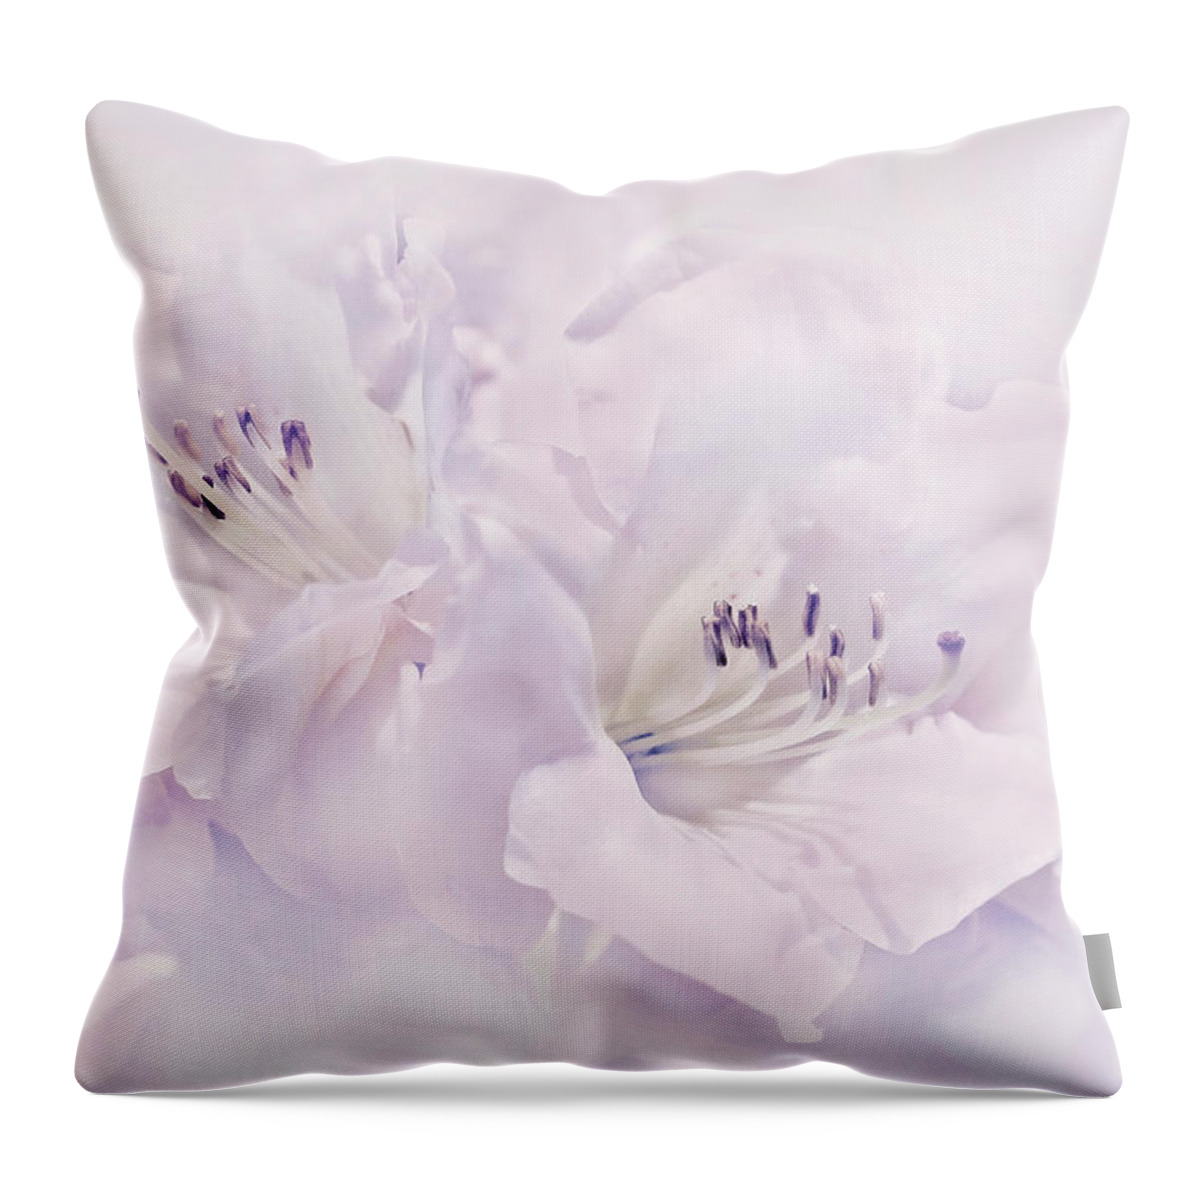 Azalea Throw Pillow featuring the photograph Lavender Azalea Flowers by Jennie Marie Schell